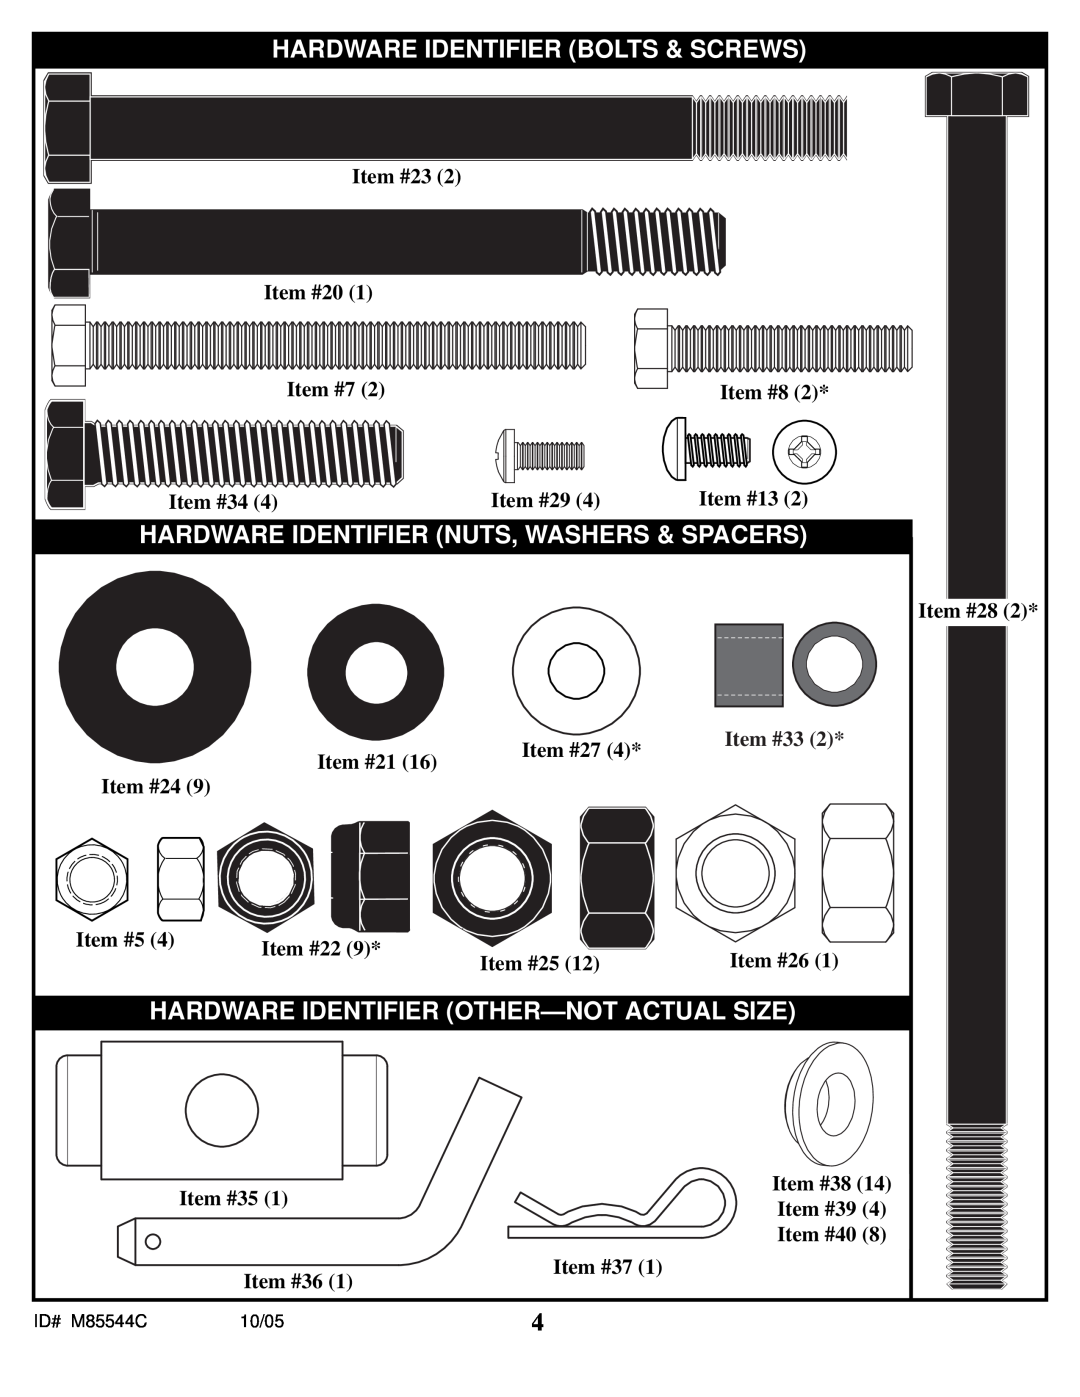 Spalding M85544C manual Hardware Identifier Bolts & Screws, Hardware Identifier Nuts, Washers & Spacers 